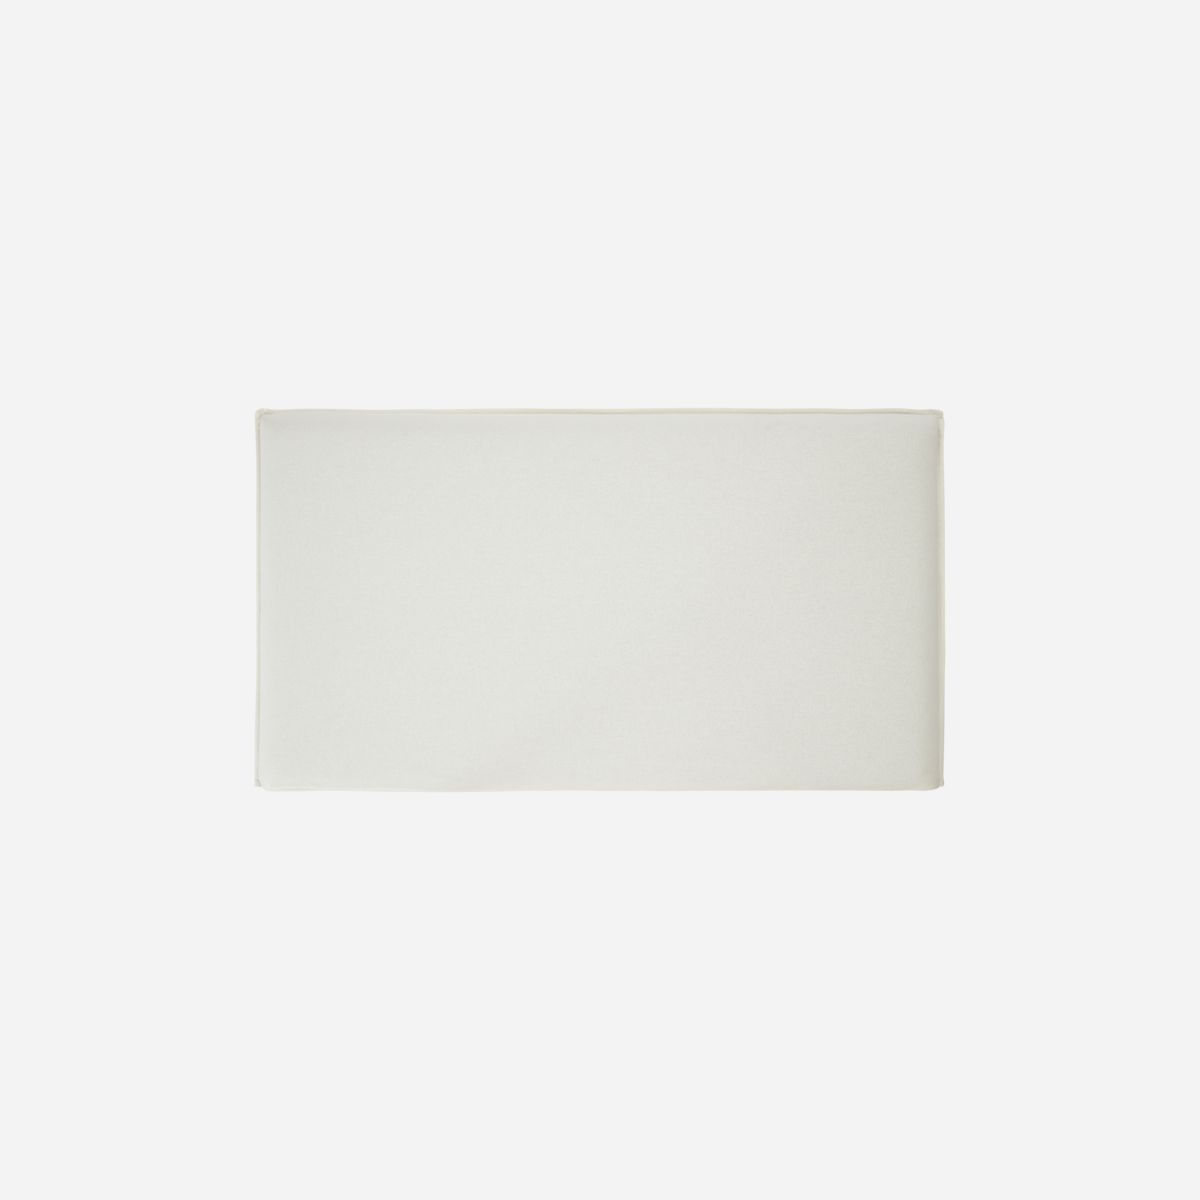 Hovedgærde, Hesthoei, 80 x 150 cm, snow